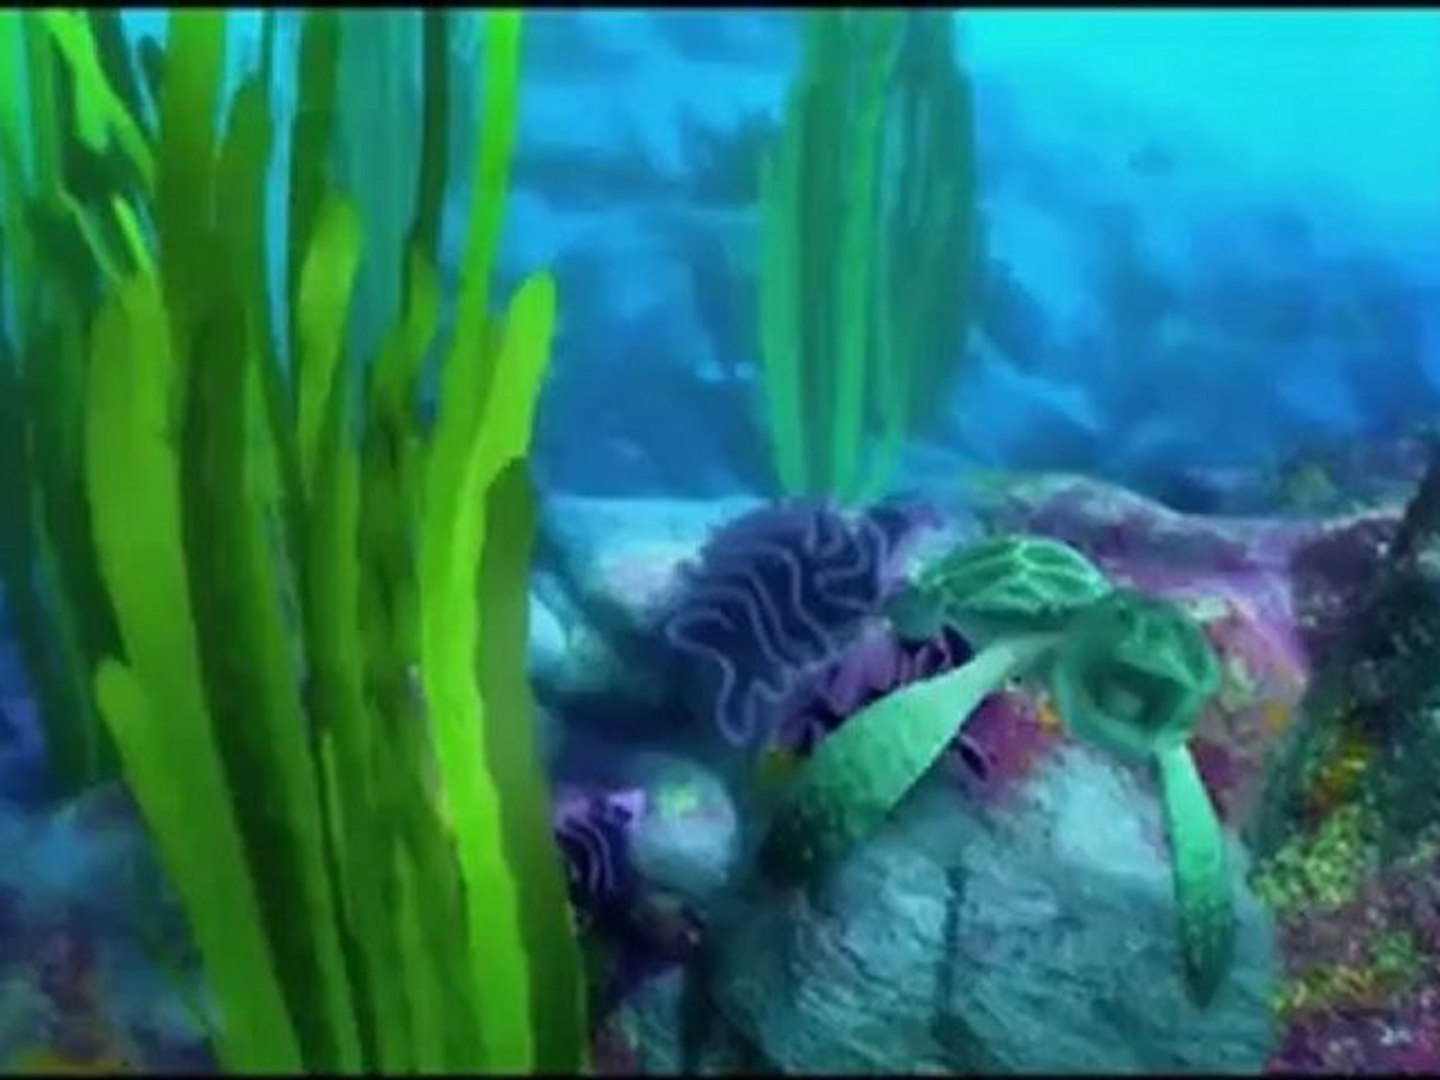 A Turtle's Tale: Escape From Paradise 3D Trailer